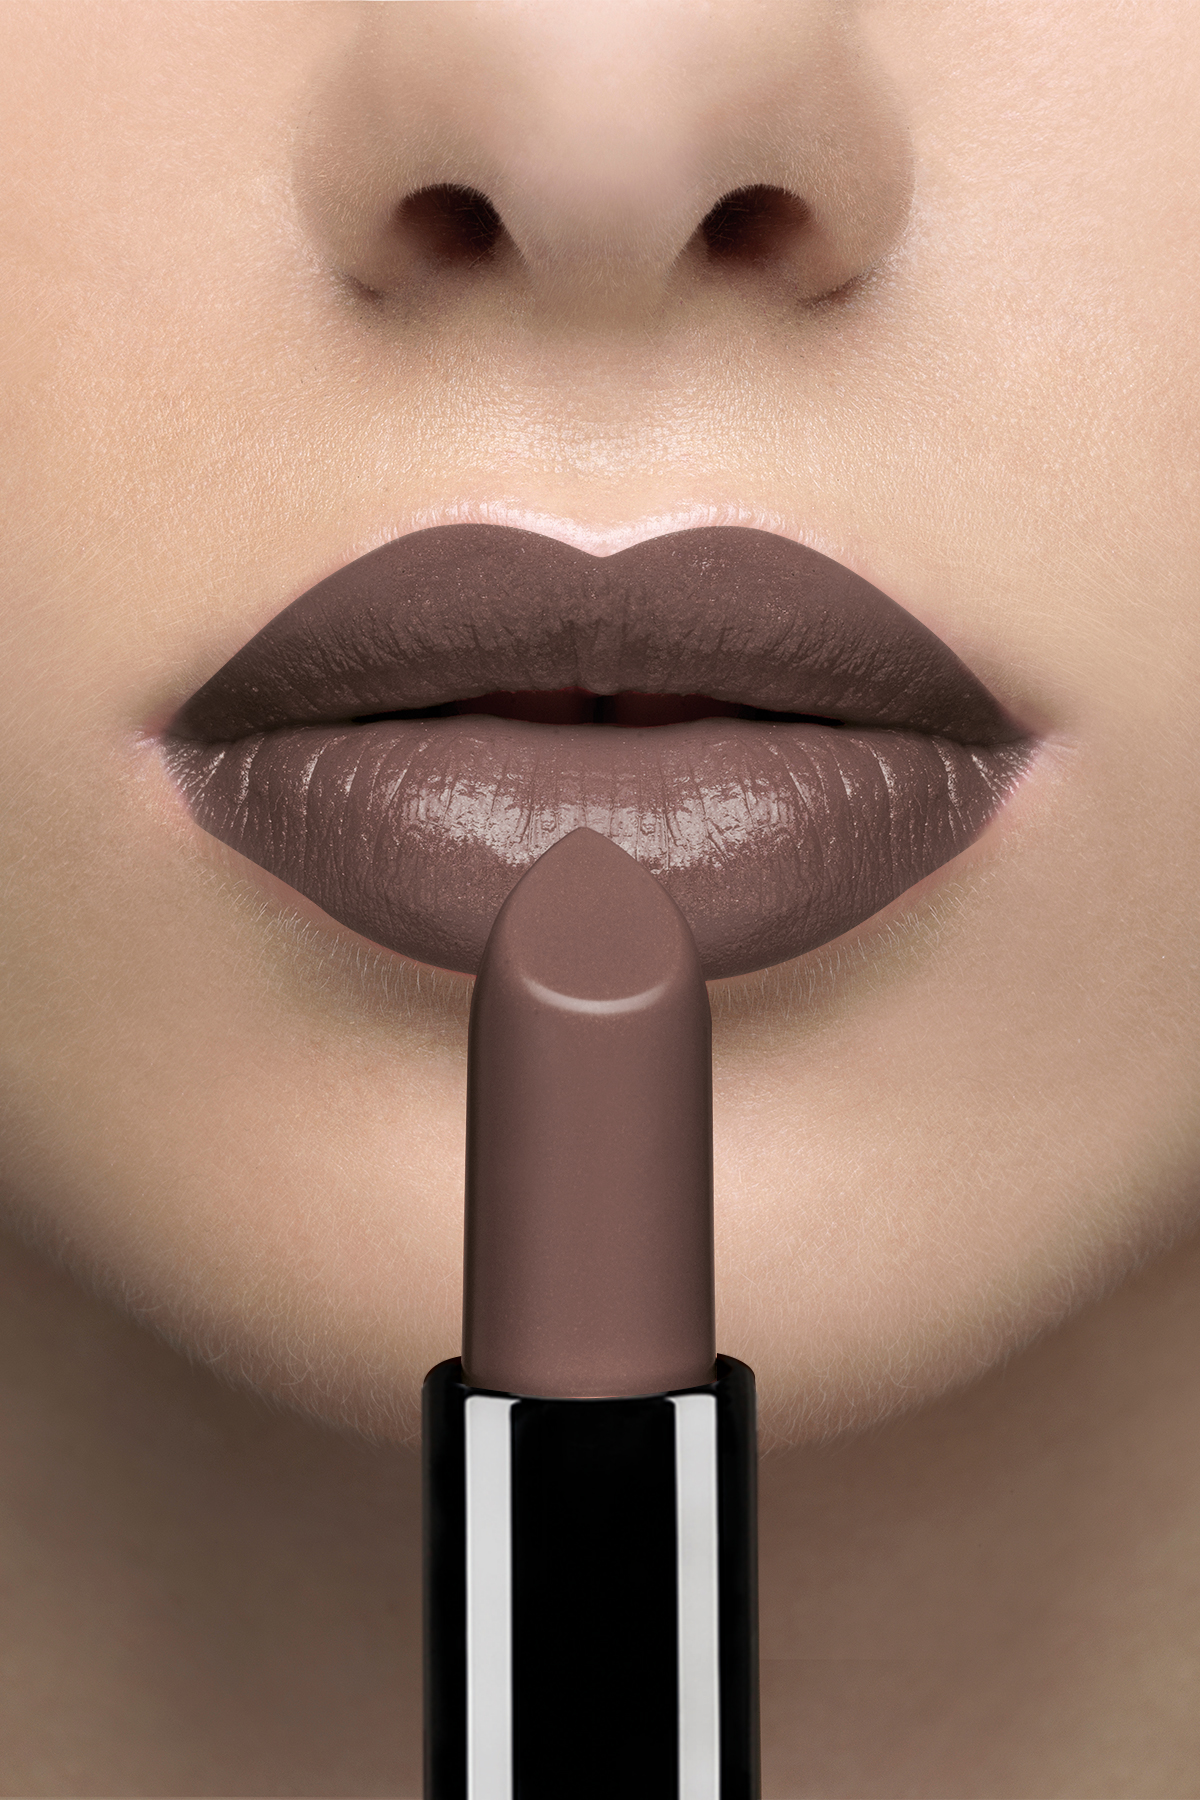 Matte Lipstick - 180 -Lipstick Thumbnail